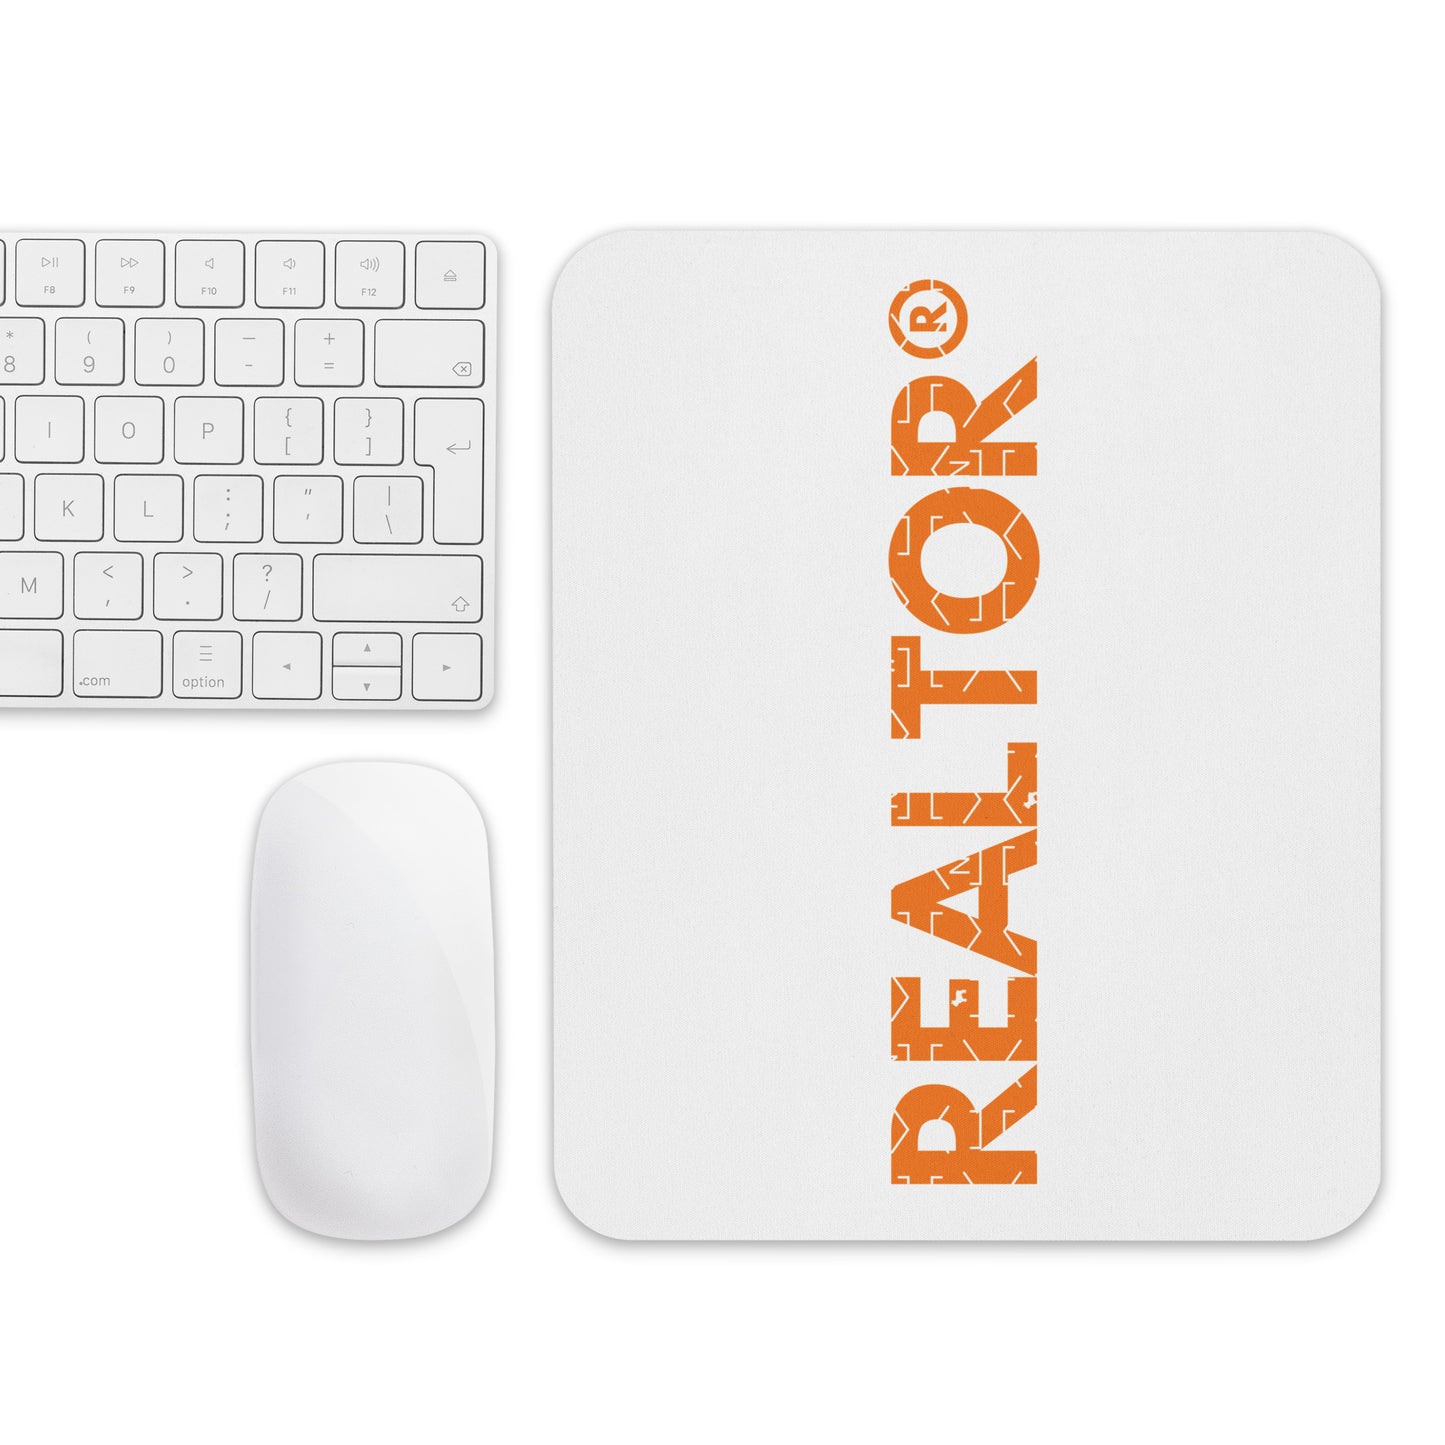 Realtor Mouse pad